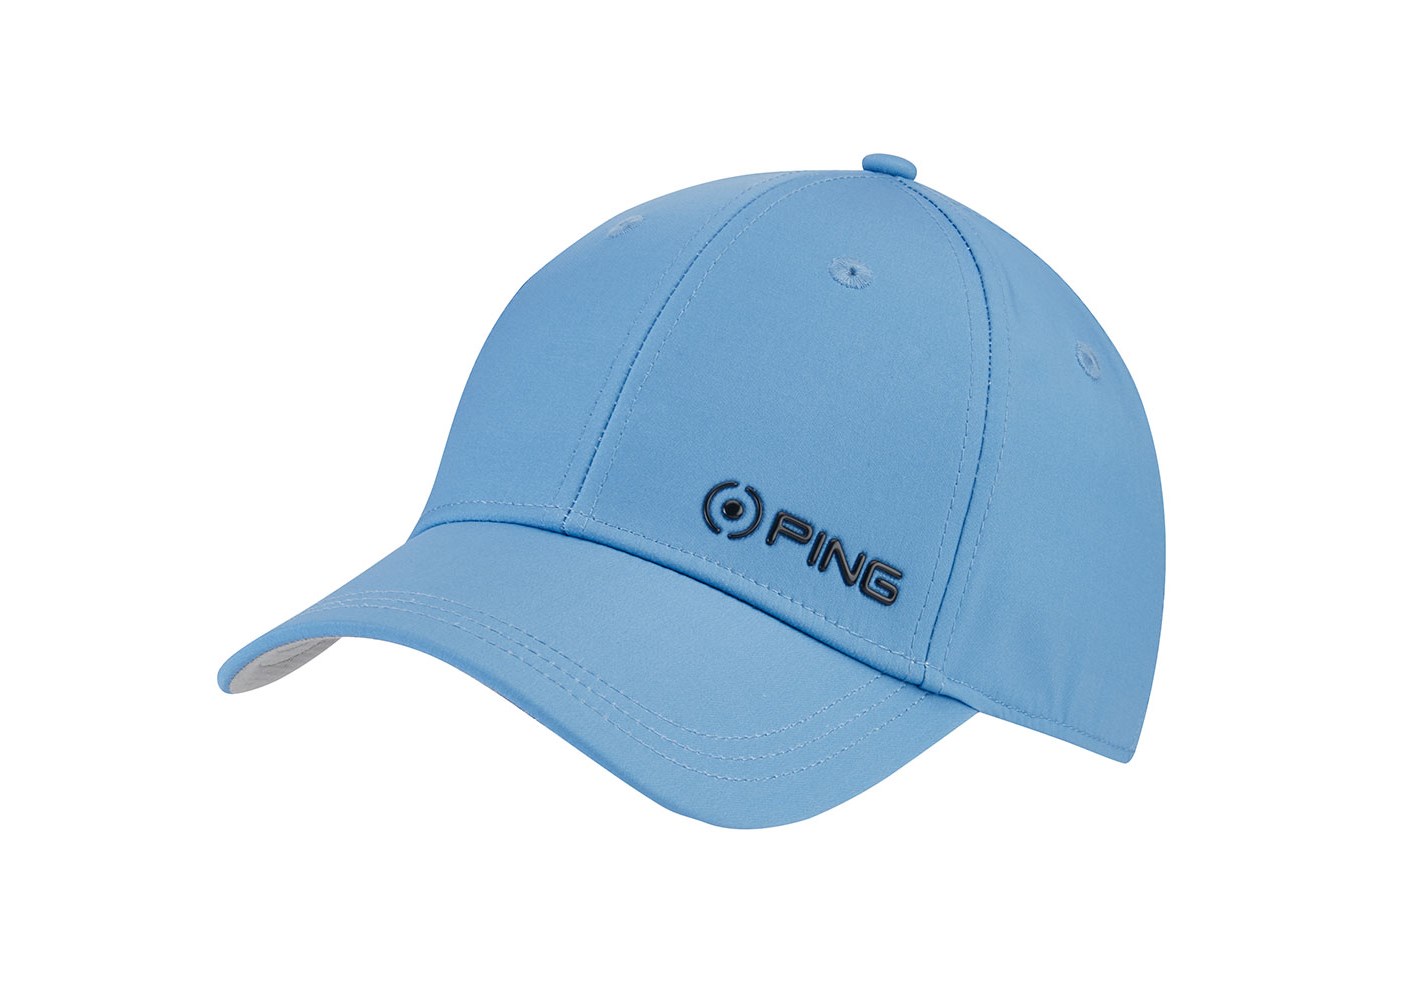 Ping Mens Eye Sensor Cool Cap - Golfonline